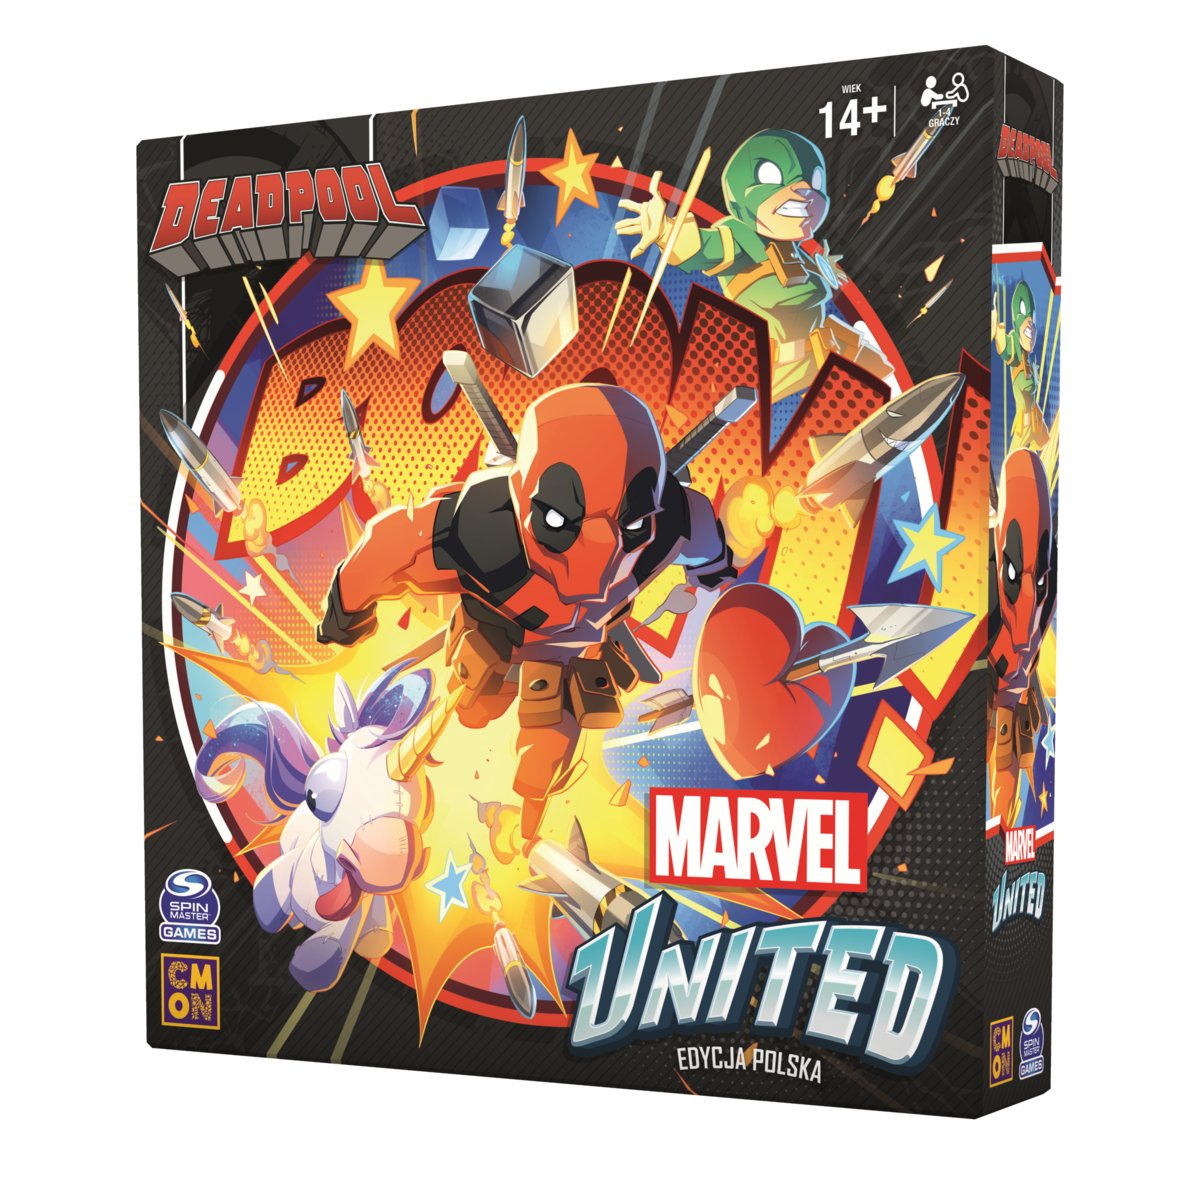 Marvel United: Deadpool gra rodzinna Portal Games